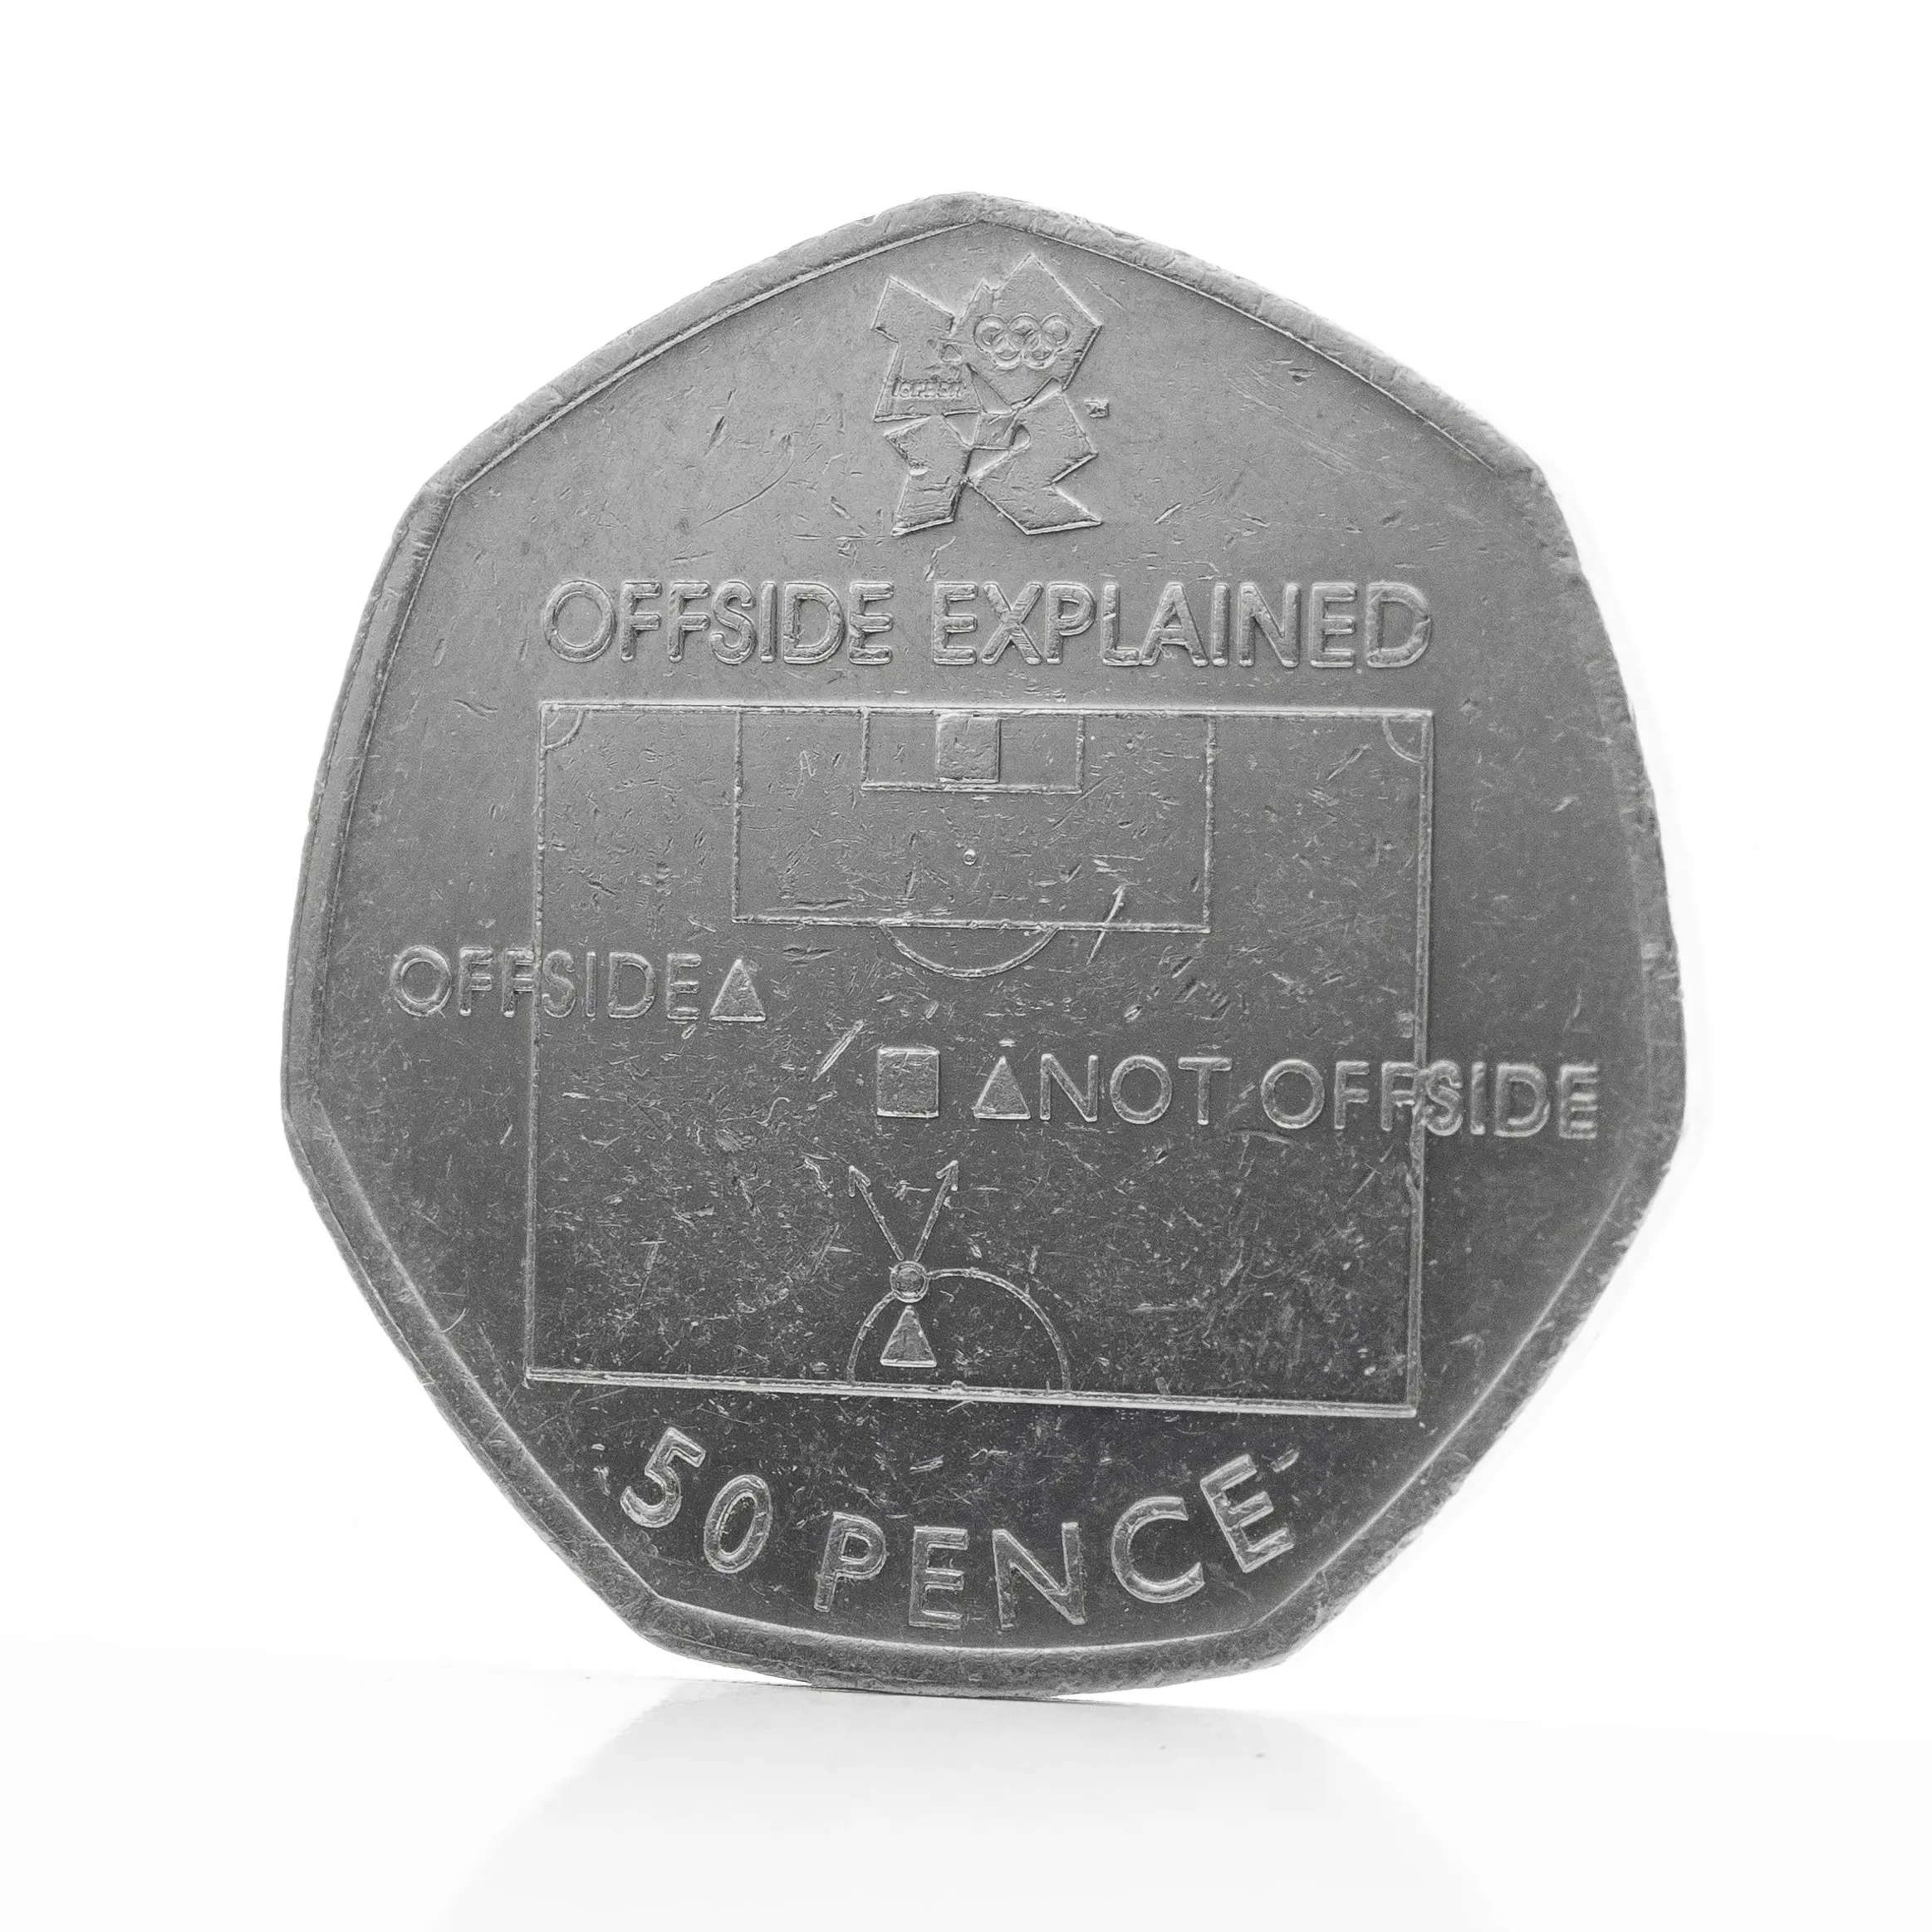 Offside 50p coin reverse design